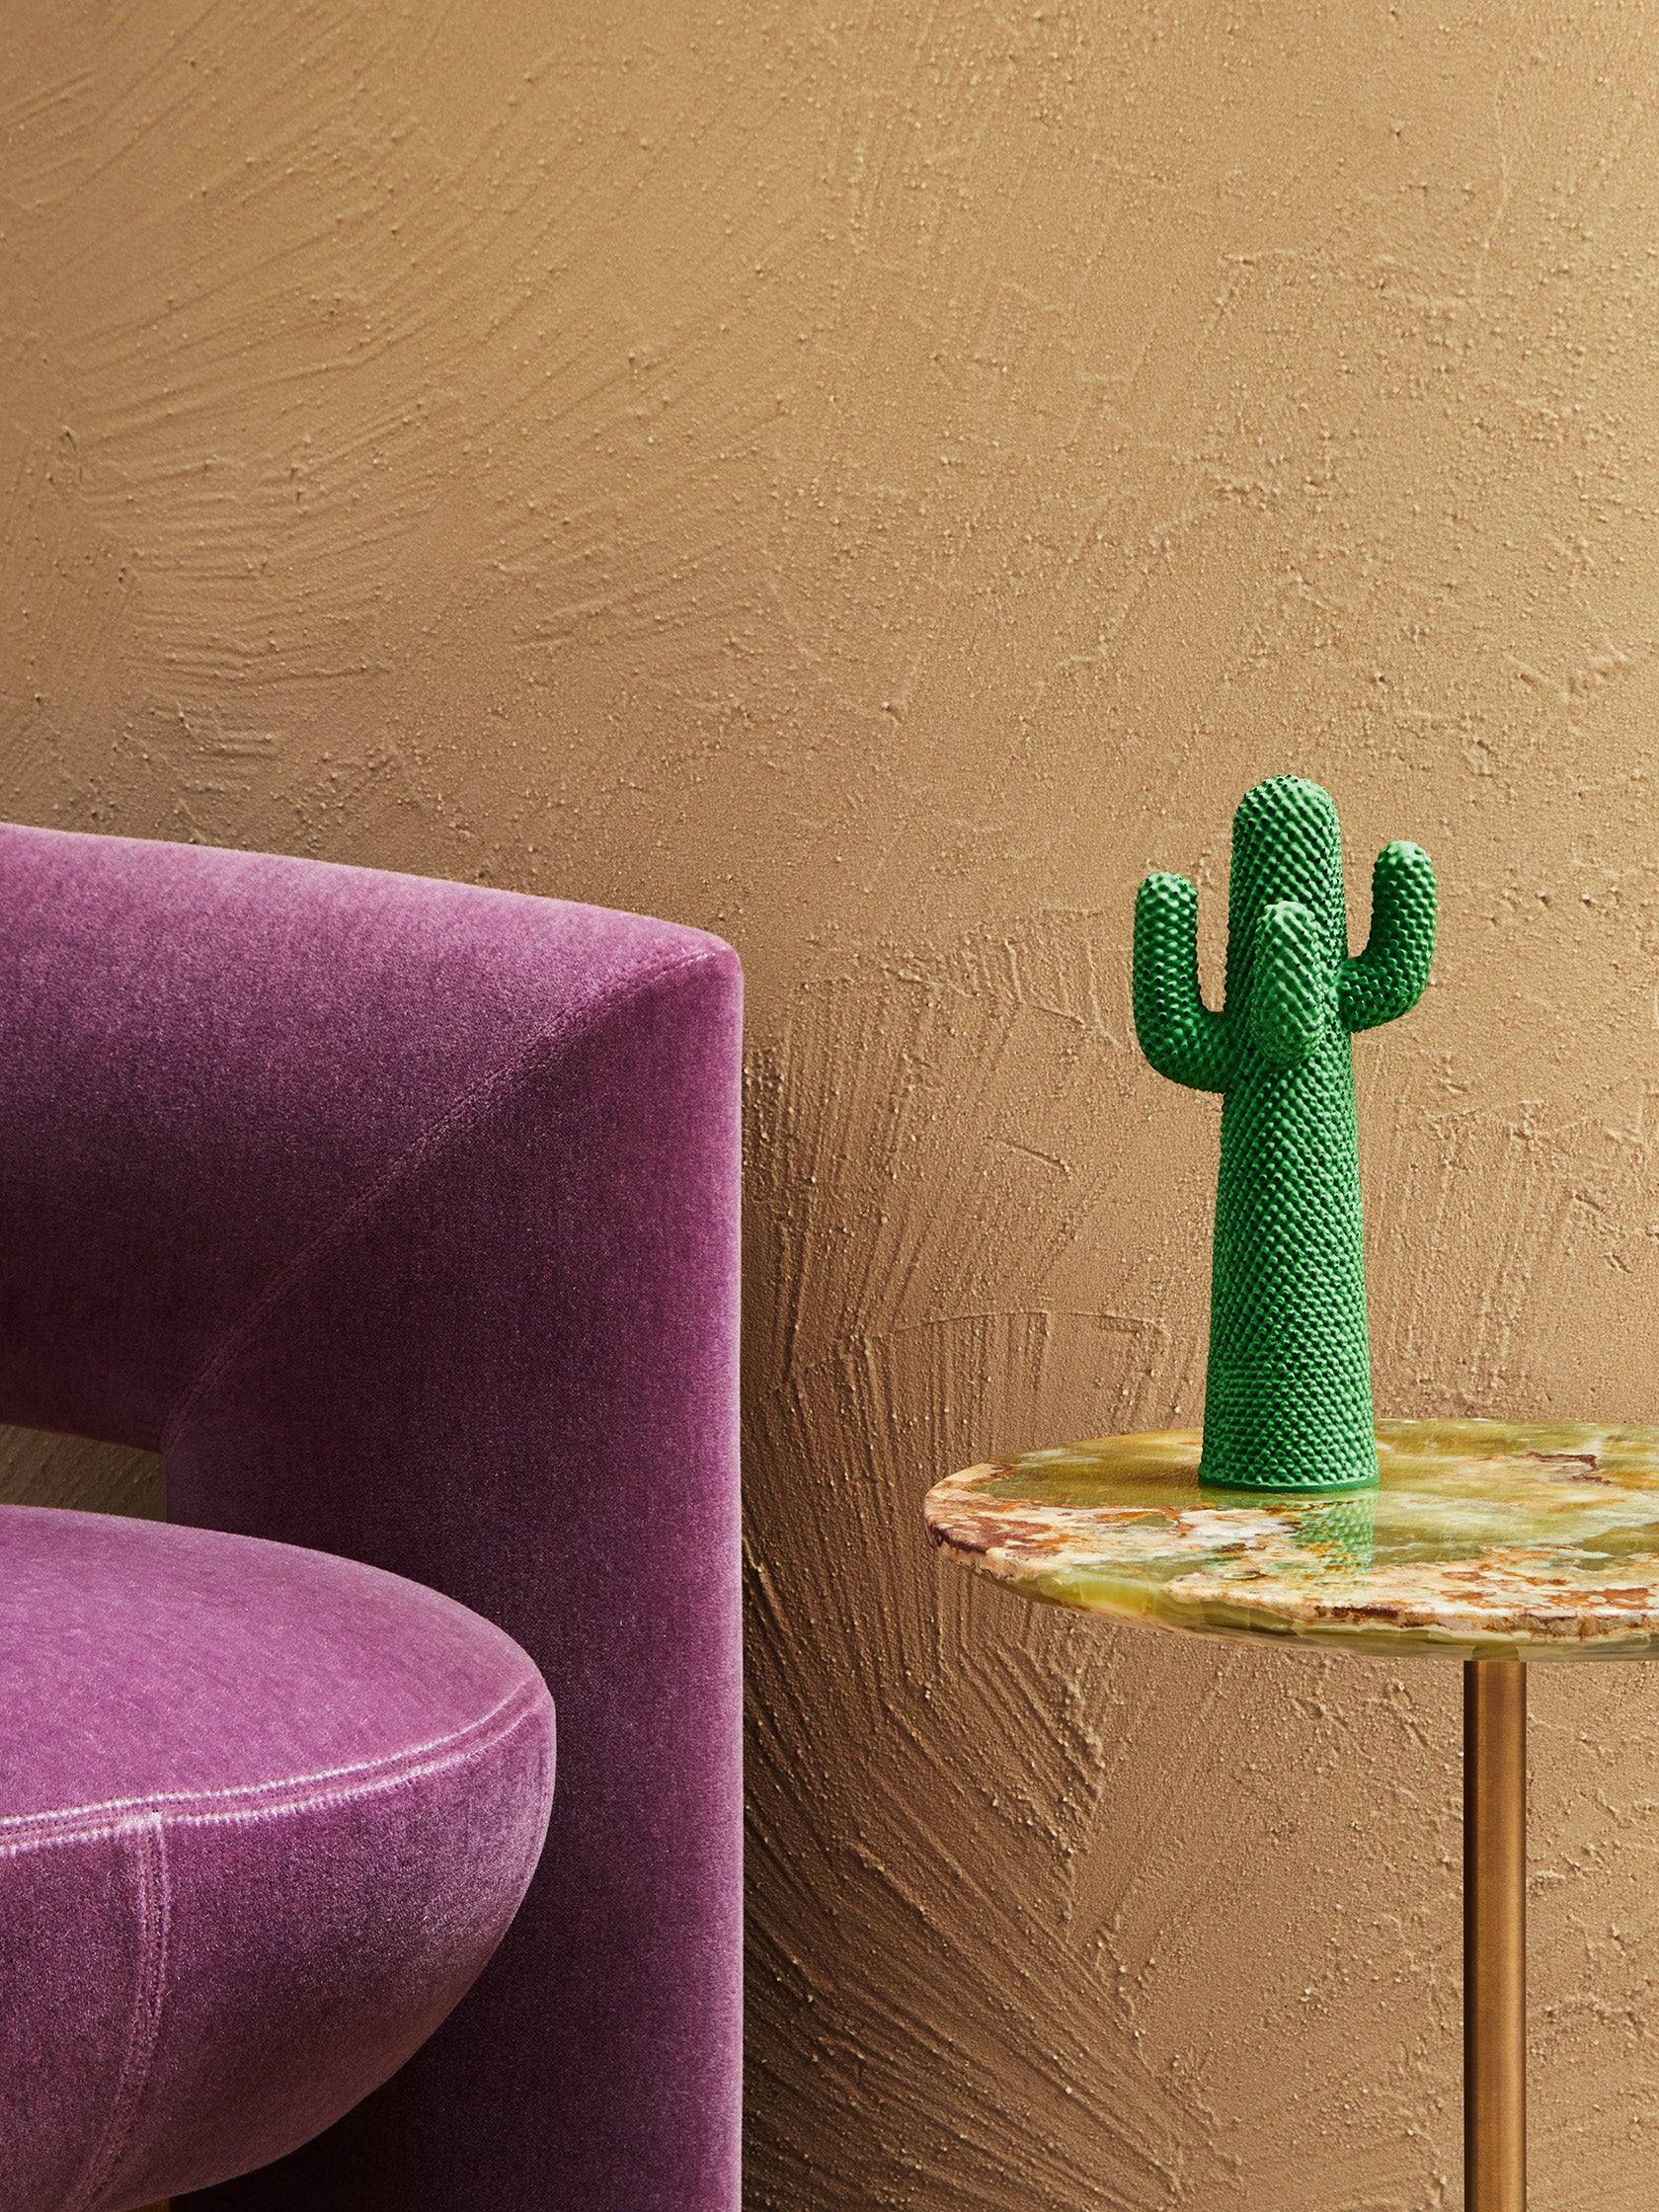 Guframini Cactus Green by Gufram - Mankovsky Gallery